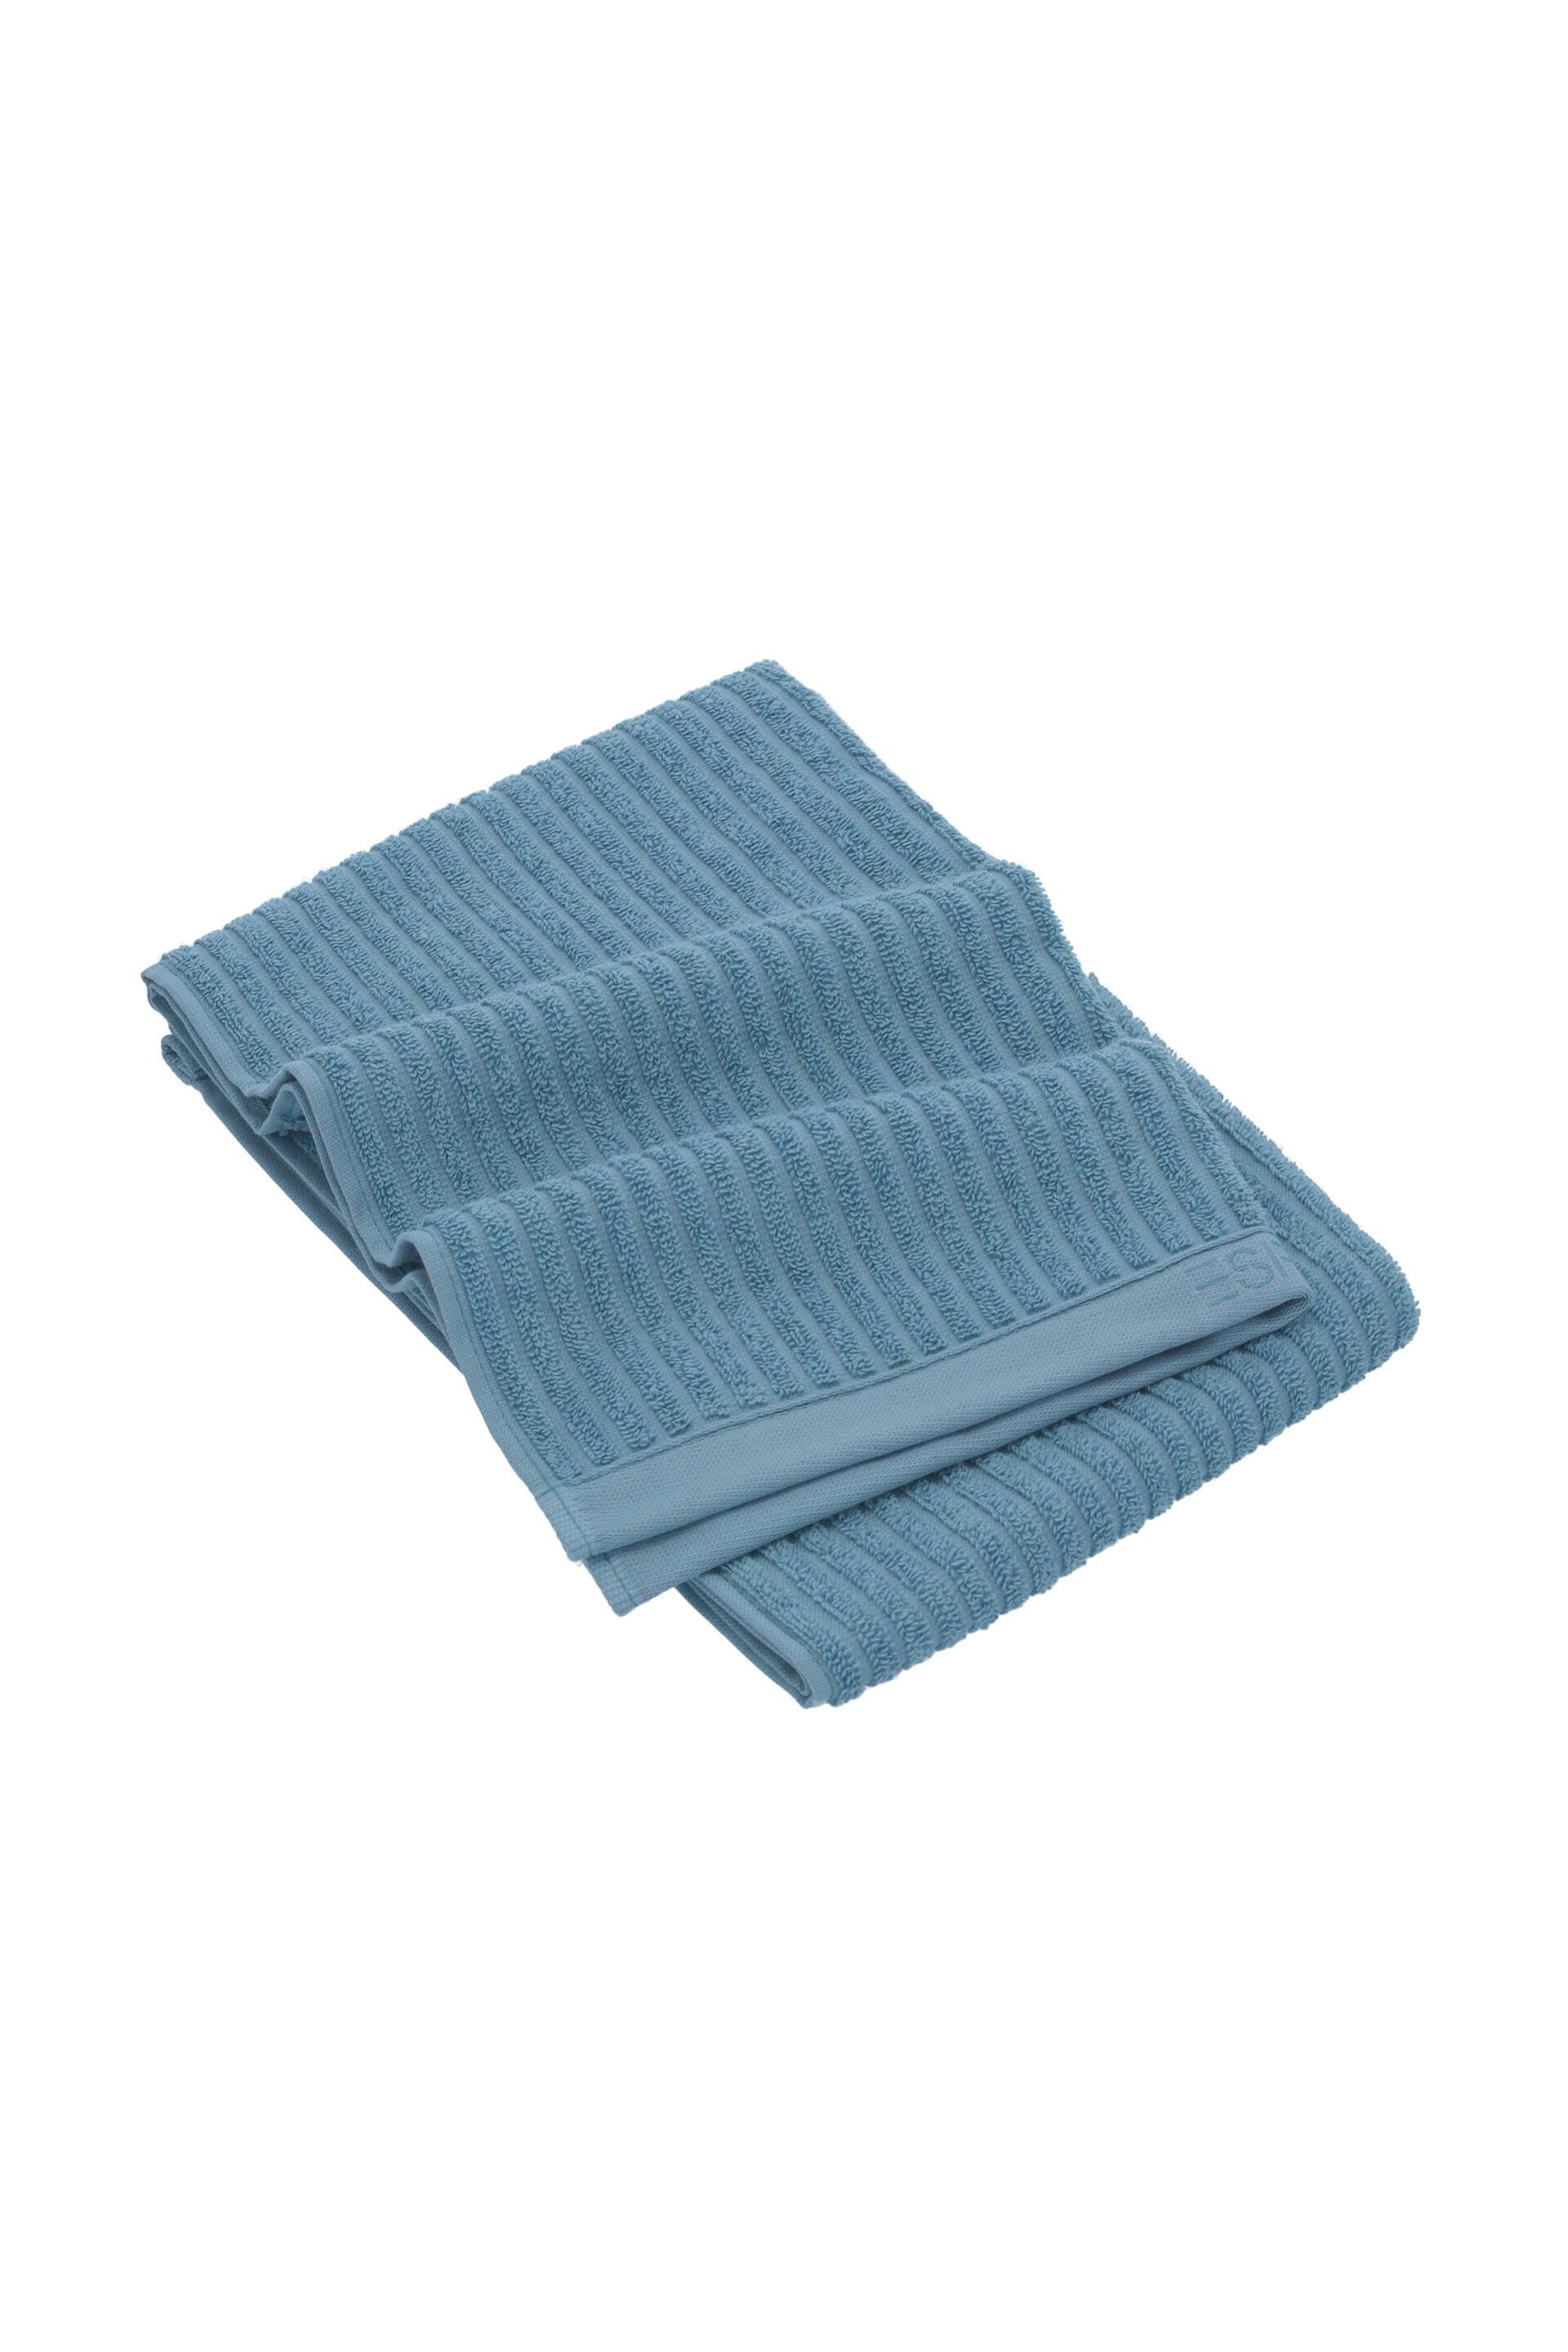 Esprit Modern lines hand towel